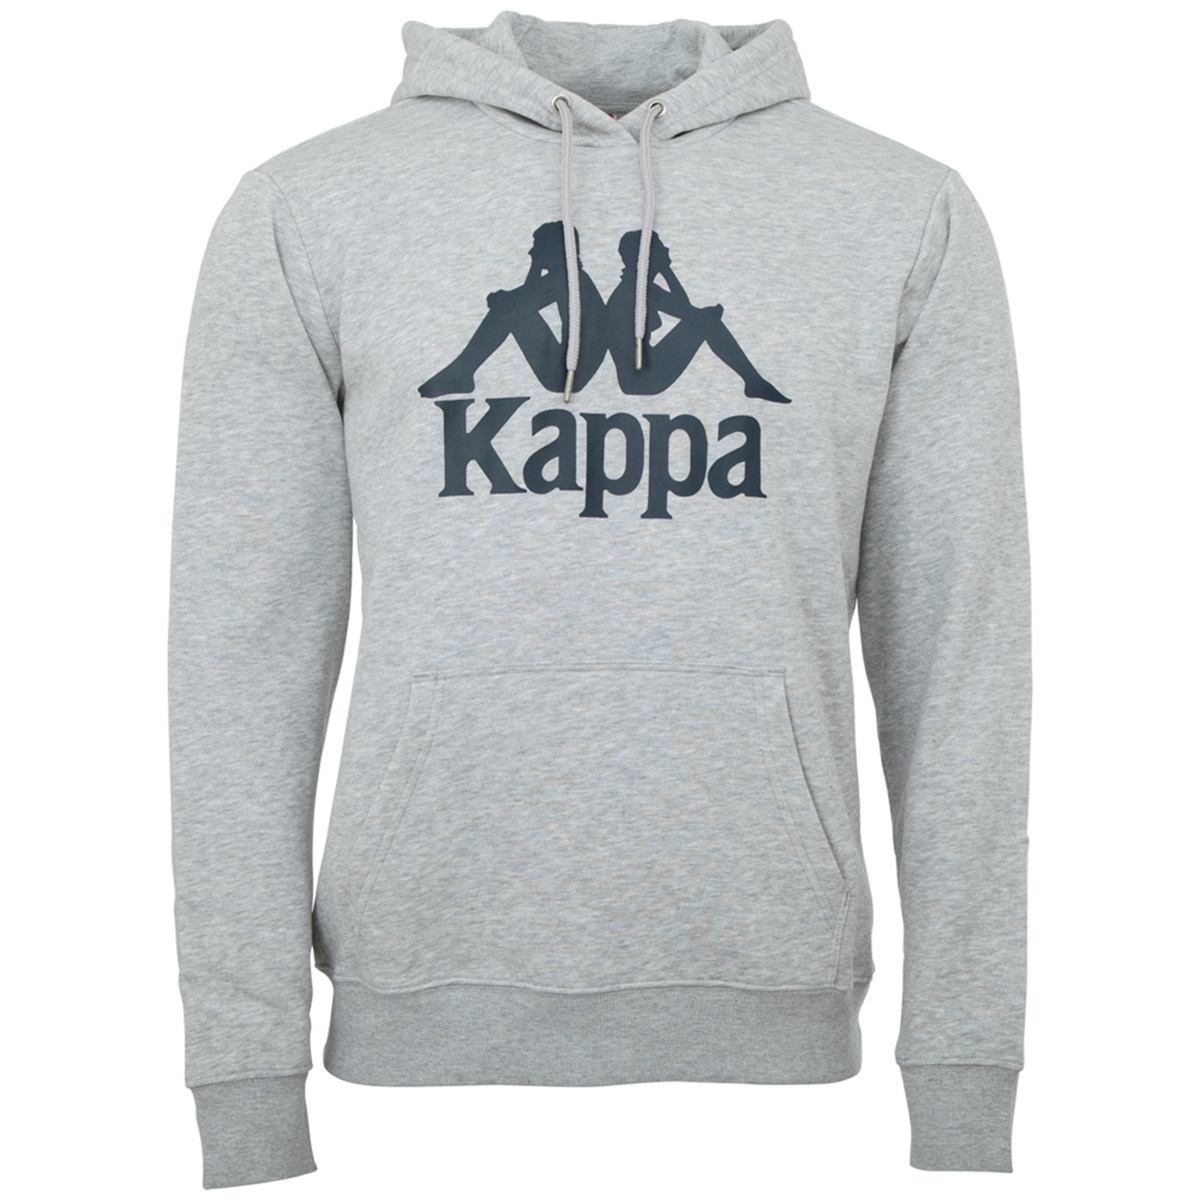 Kappa Unisex Hooded Sweatshirt grey 705322 18M